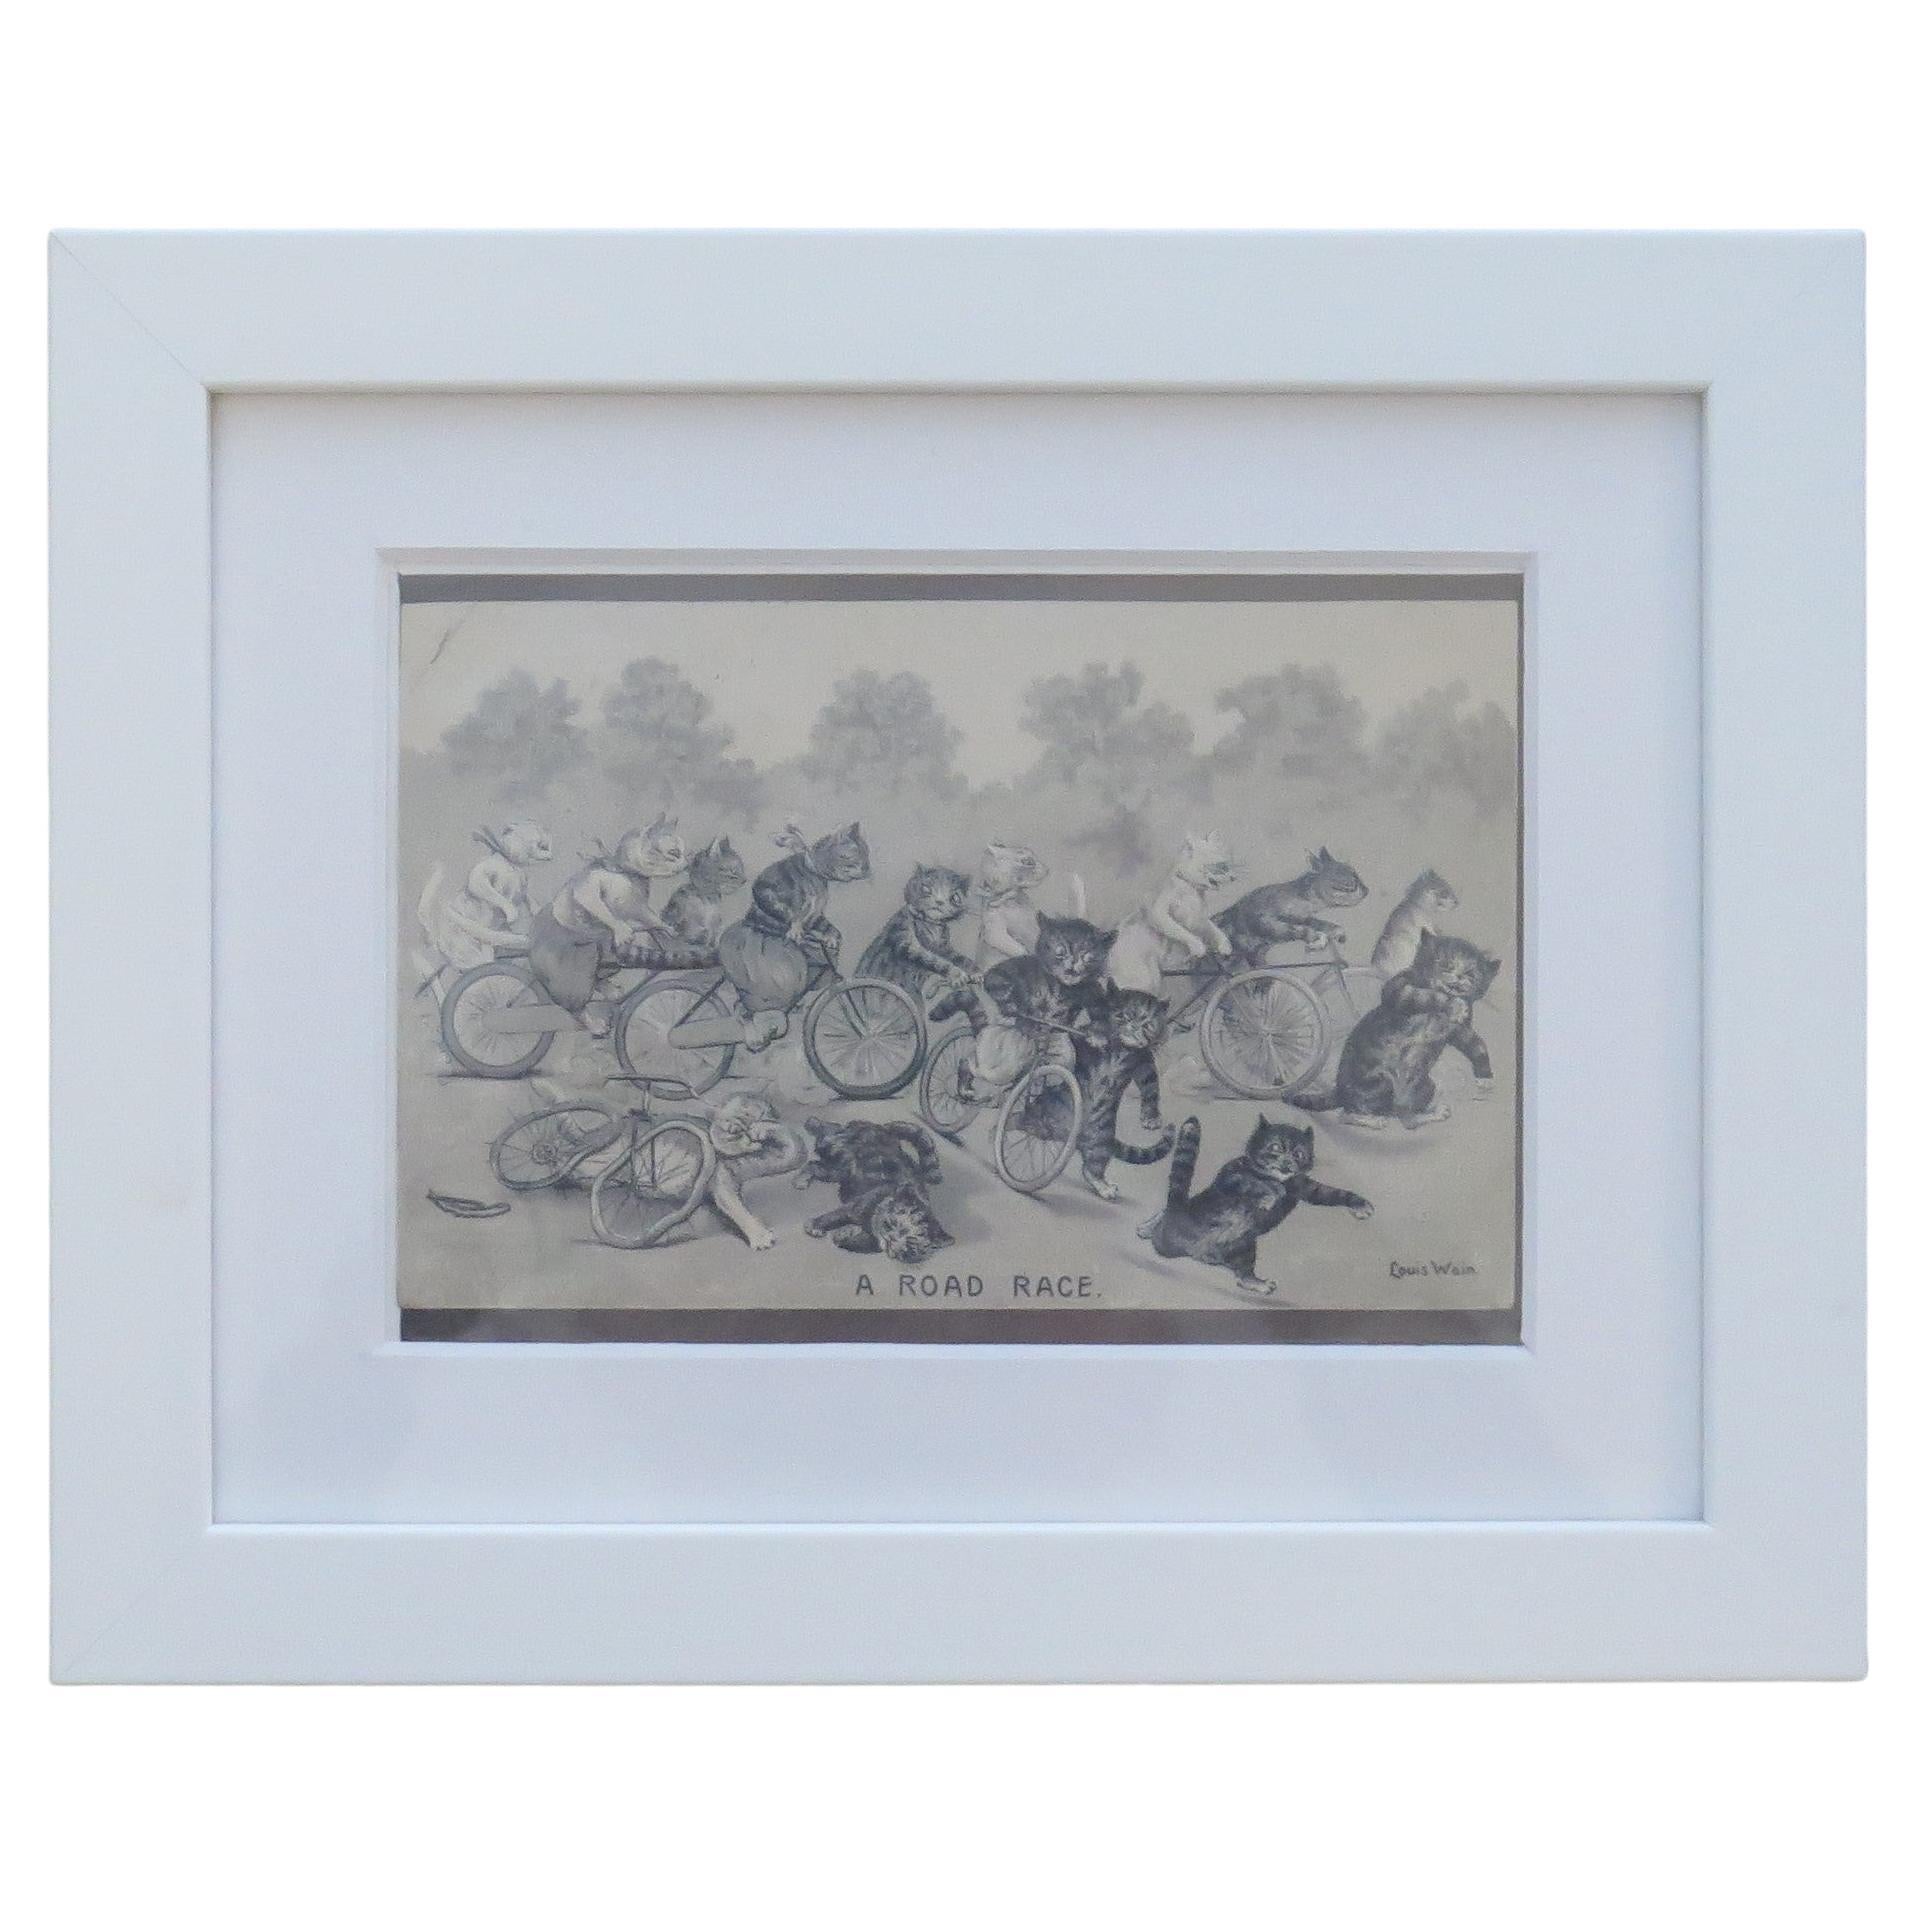 Louis Wain Framed Cat Postcard "A Road Race" Cycle Racing Theme, Edwardian 1905